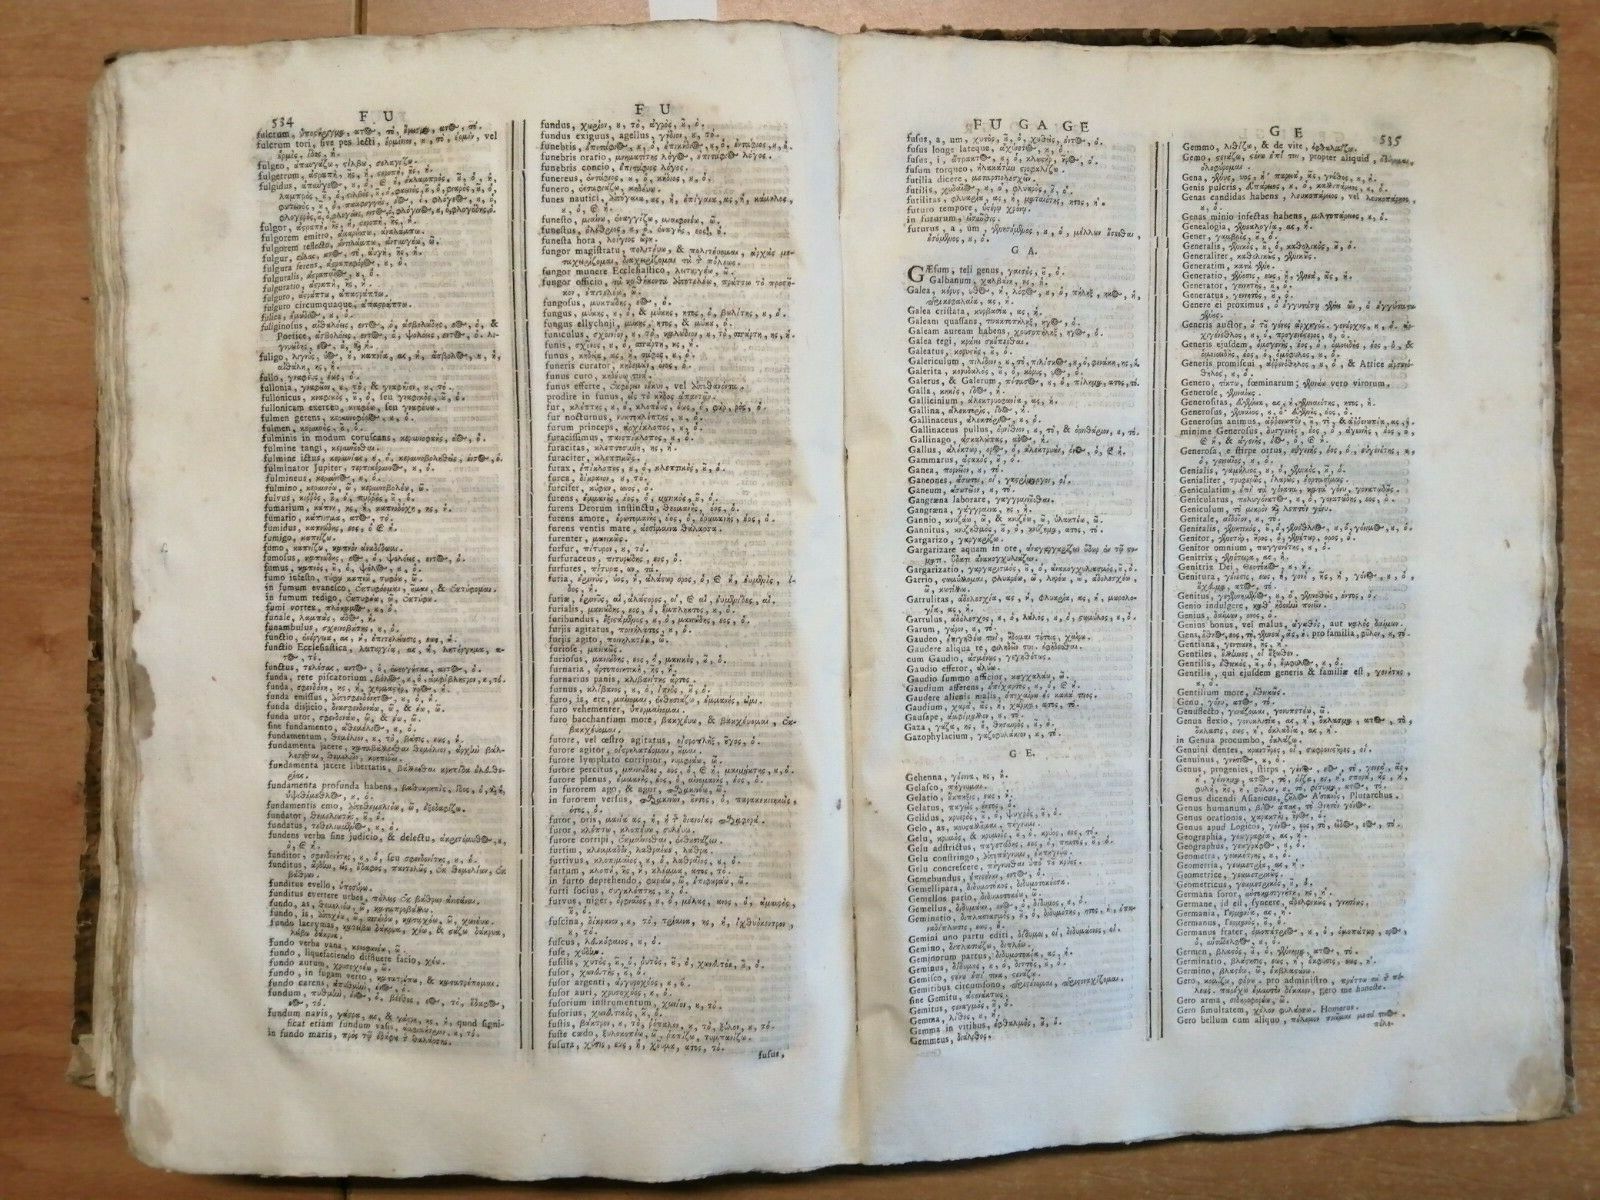 CORNELII SCHREVELII - LEXICON MANUALE GRAECO-LATINUM 1752 PATAVII MANFRE\'(